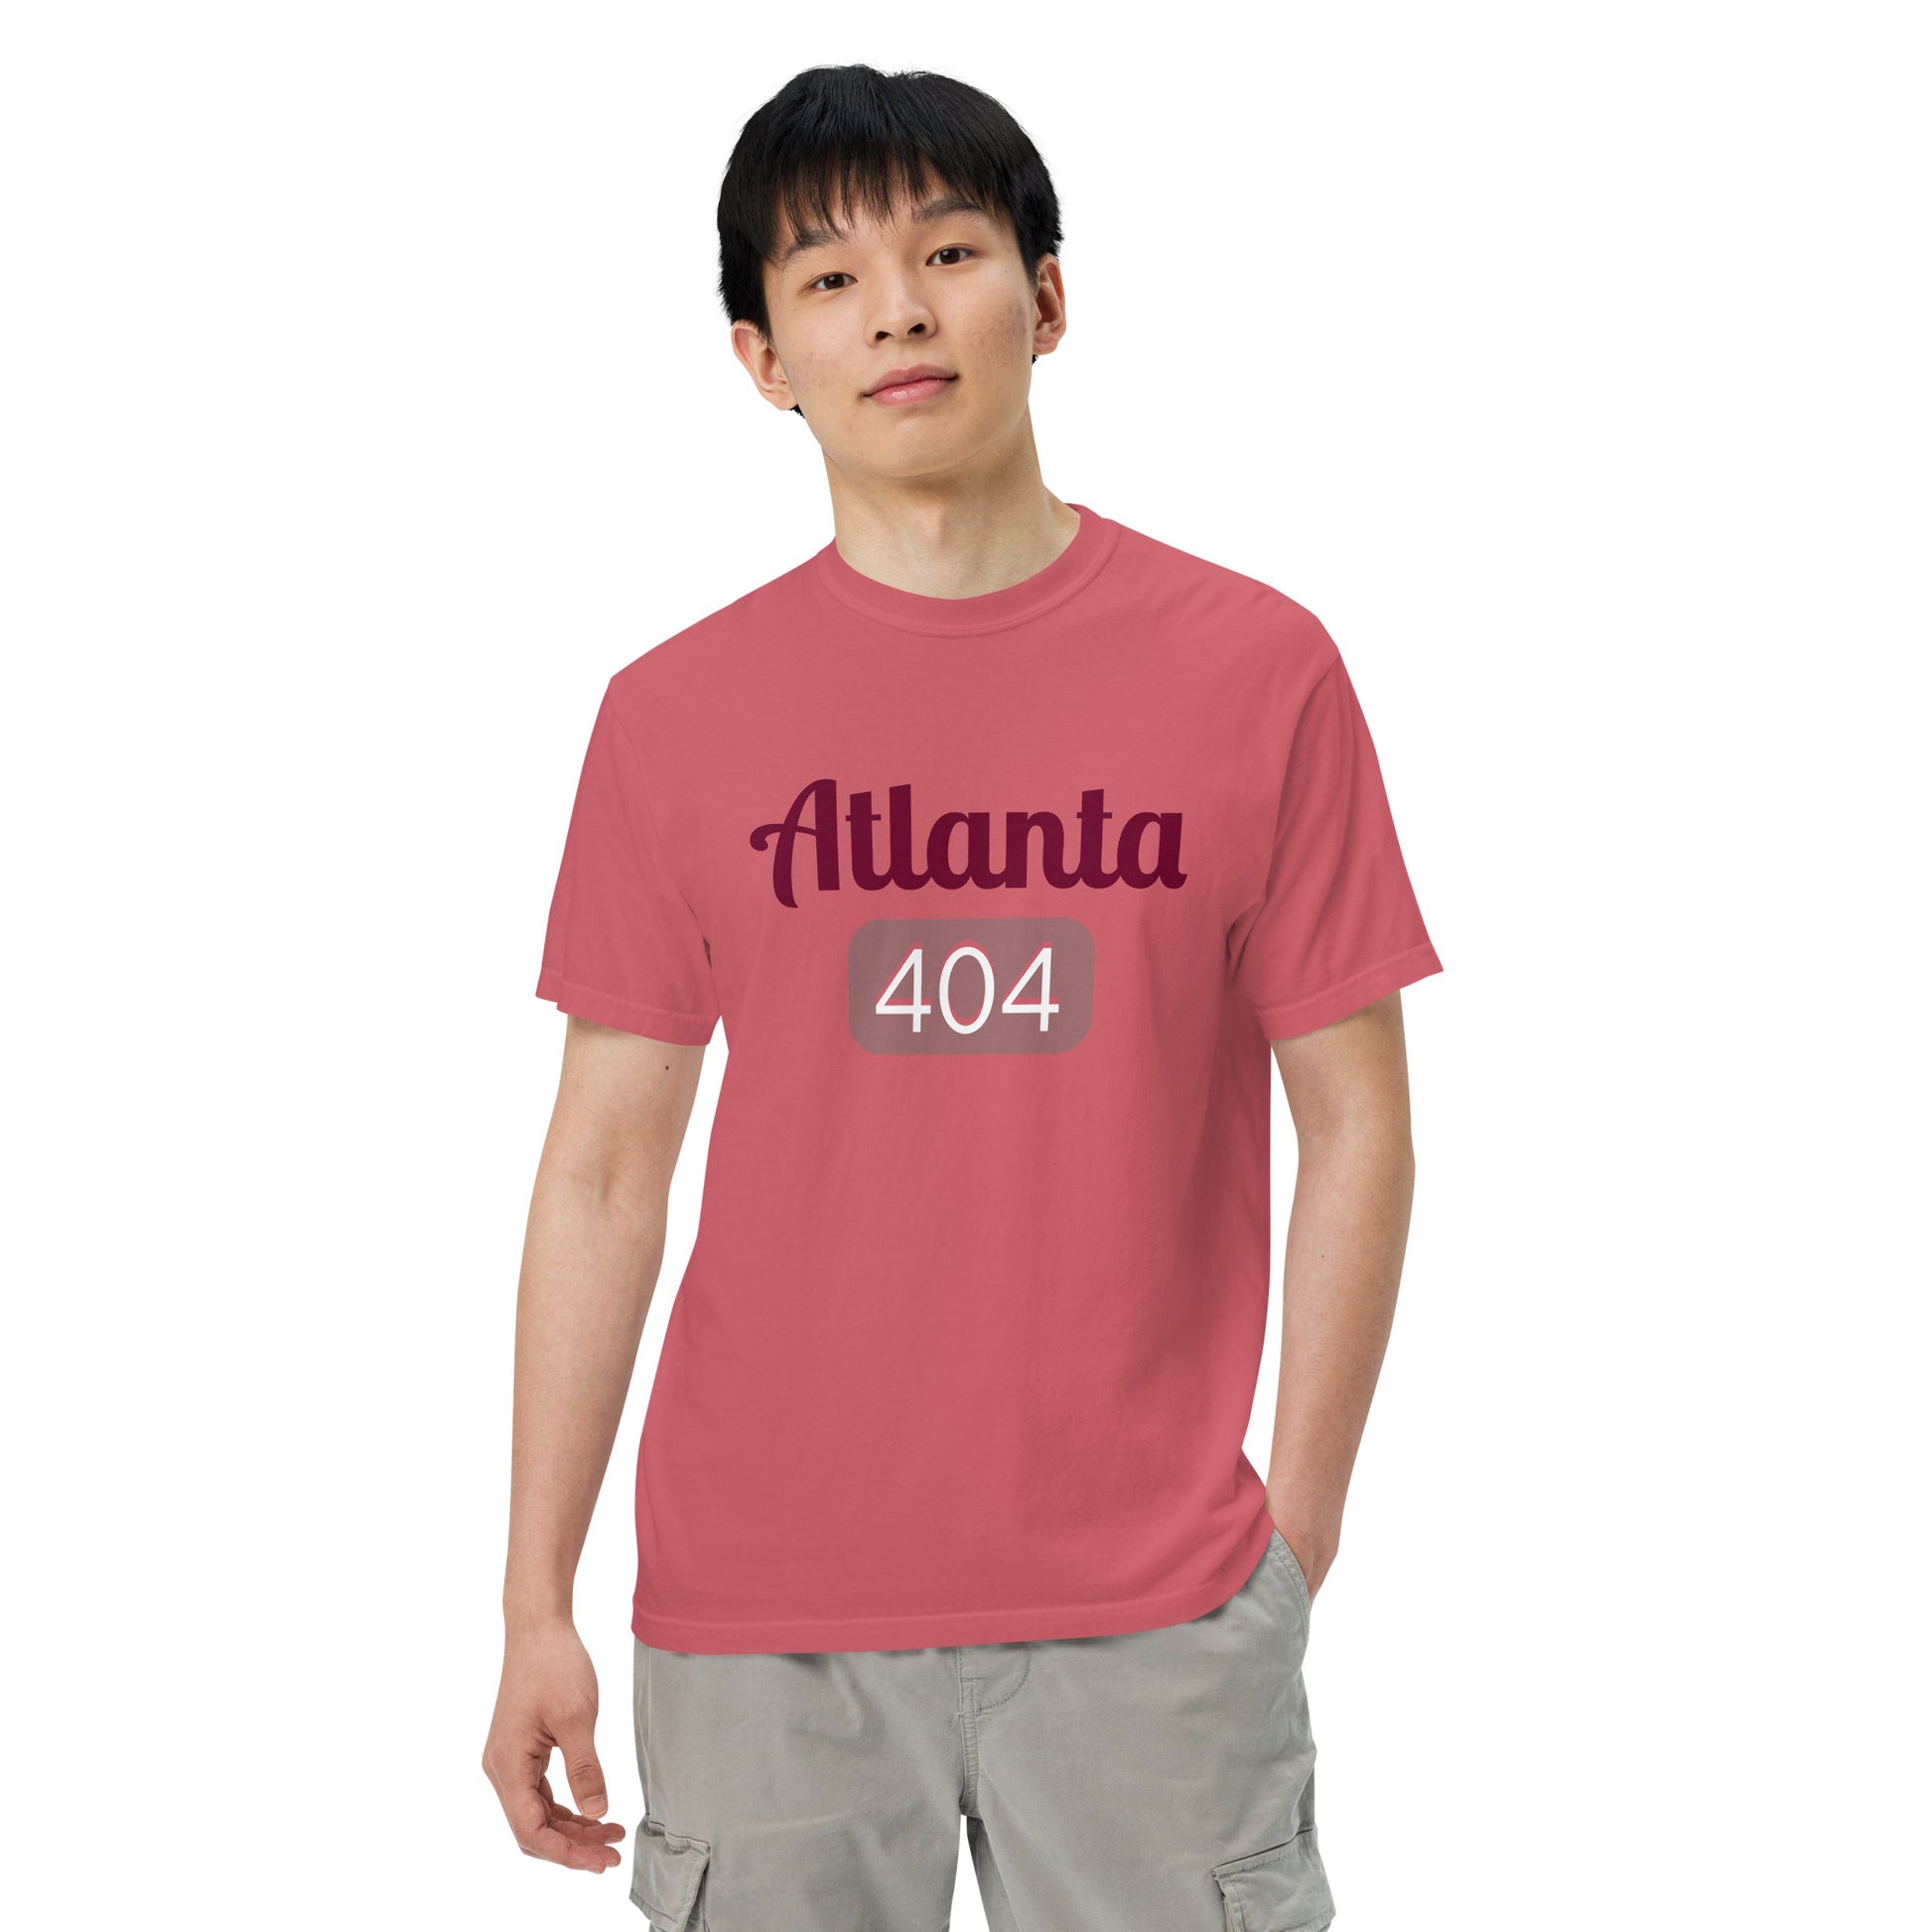 Atlanta 404 t-shirt in watermelon color